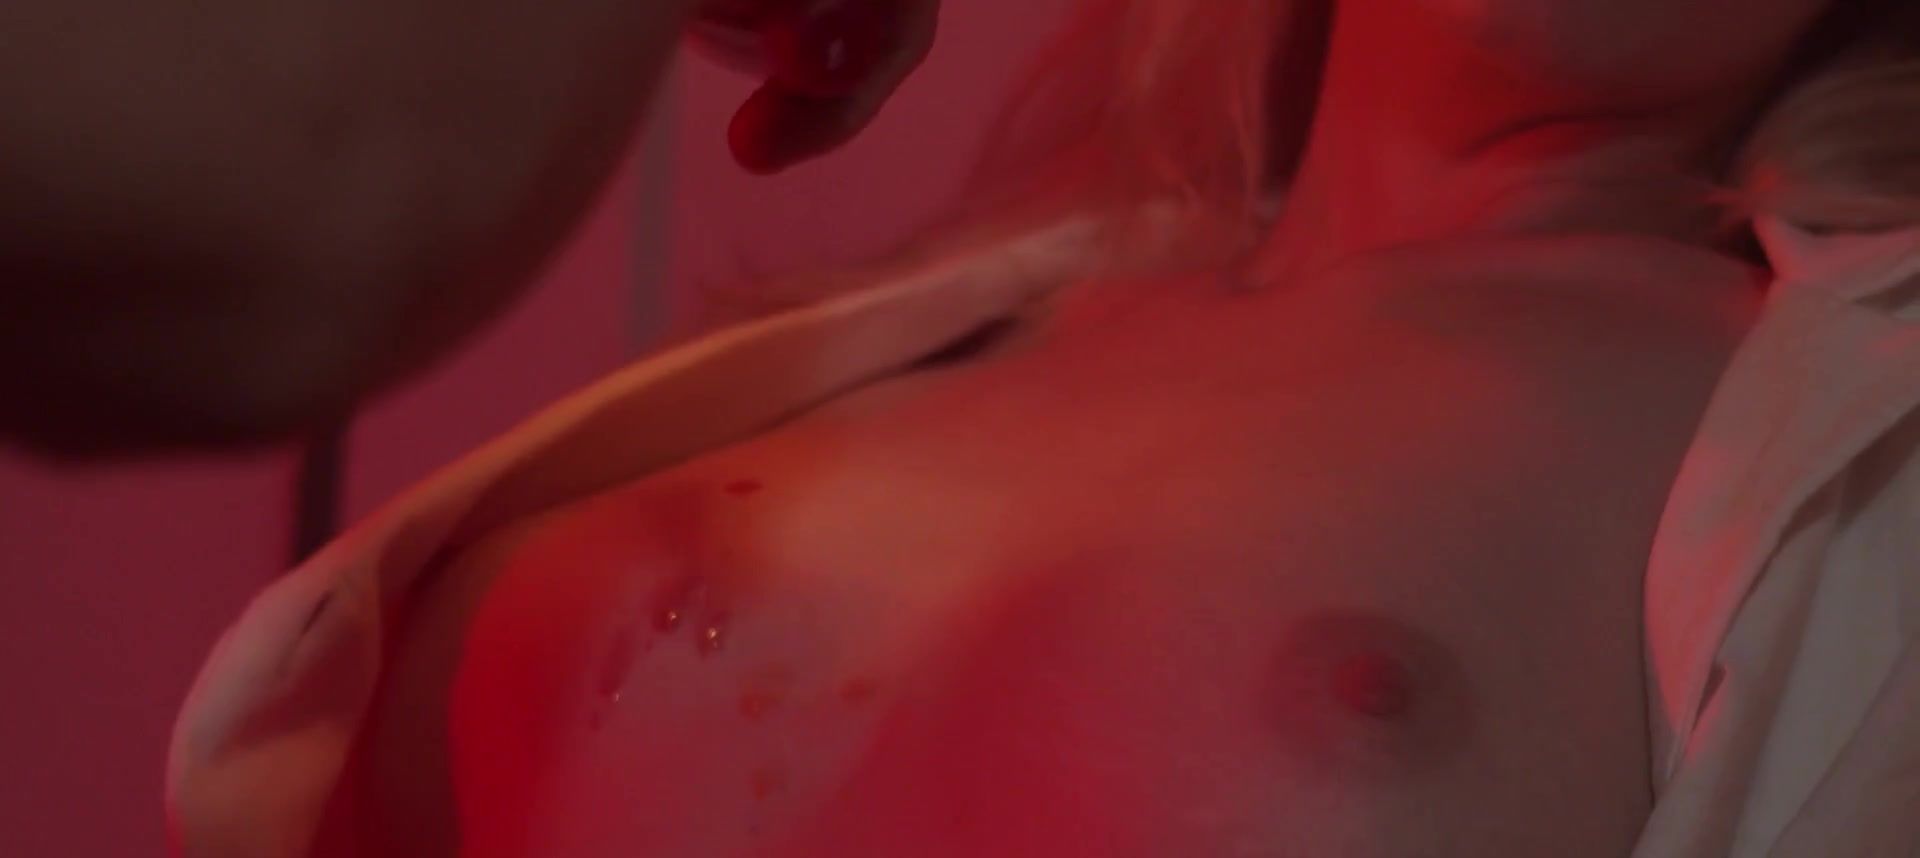 Tributo Agata Szulc nude - Erotyk (2019) Hotwife